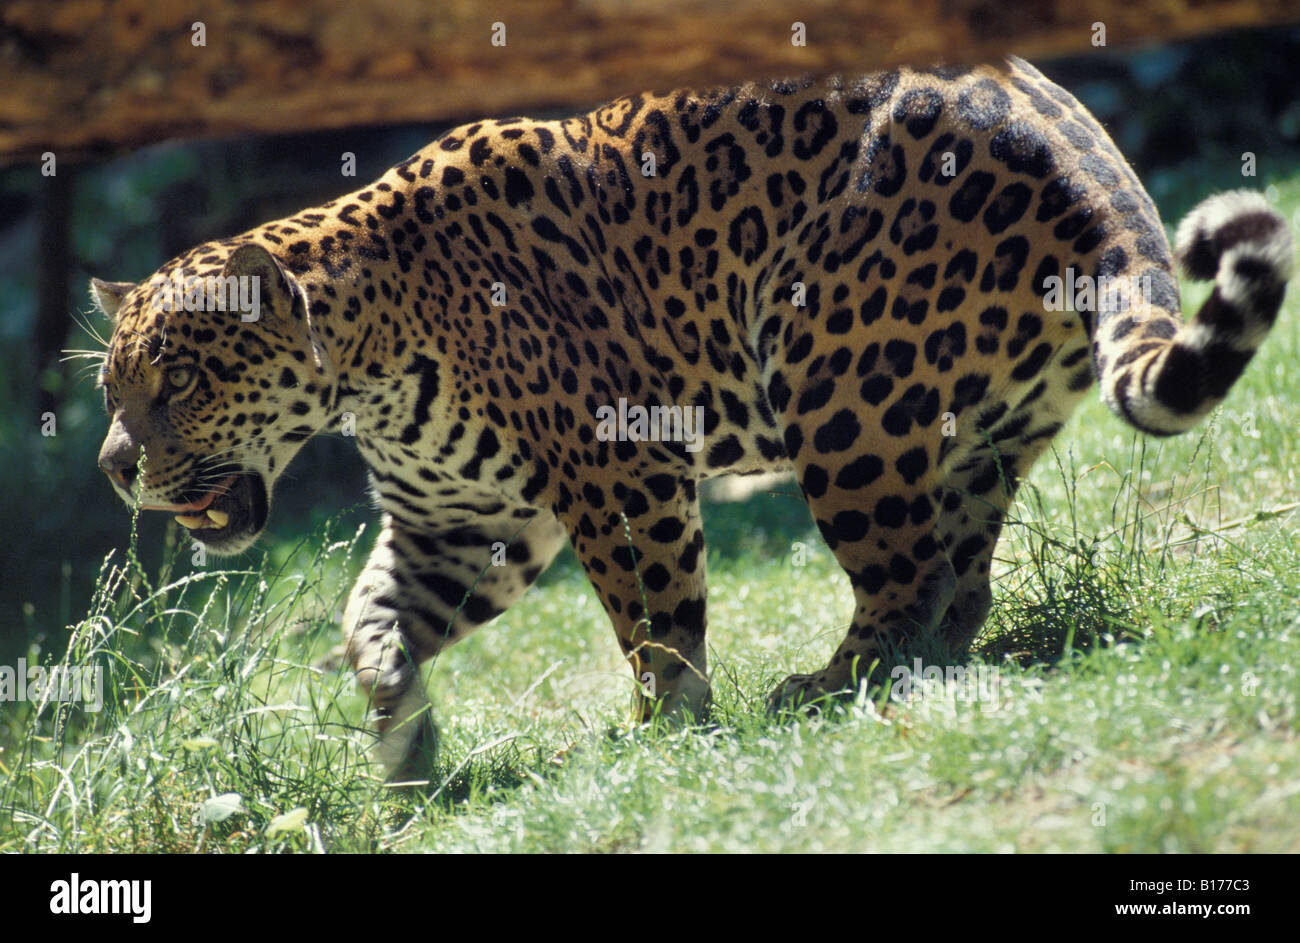 Jaguar Jaguar Panthera onca en animales del bosque lluvioso gatos grandes carnívoros Carnivora Felidae Grosskatzen Jaguare Katzen mamíferos Natu Foto de stock